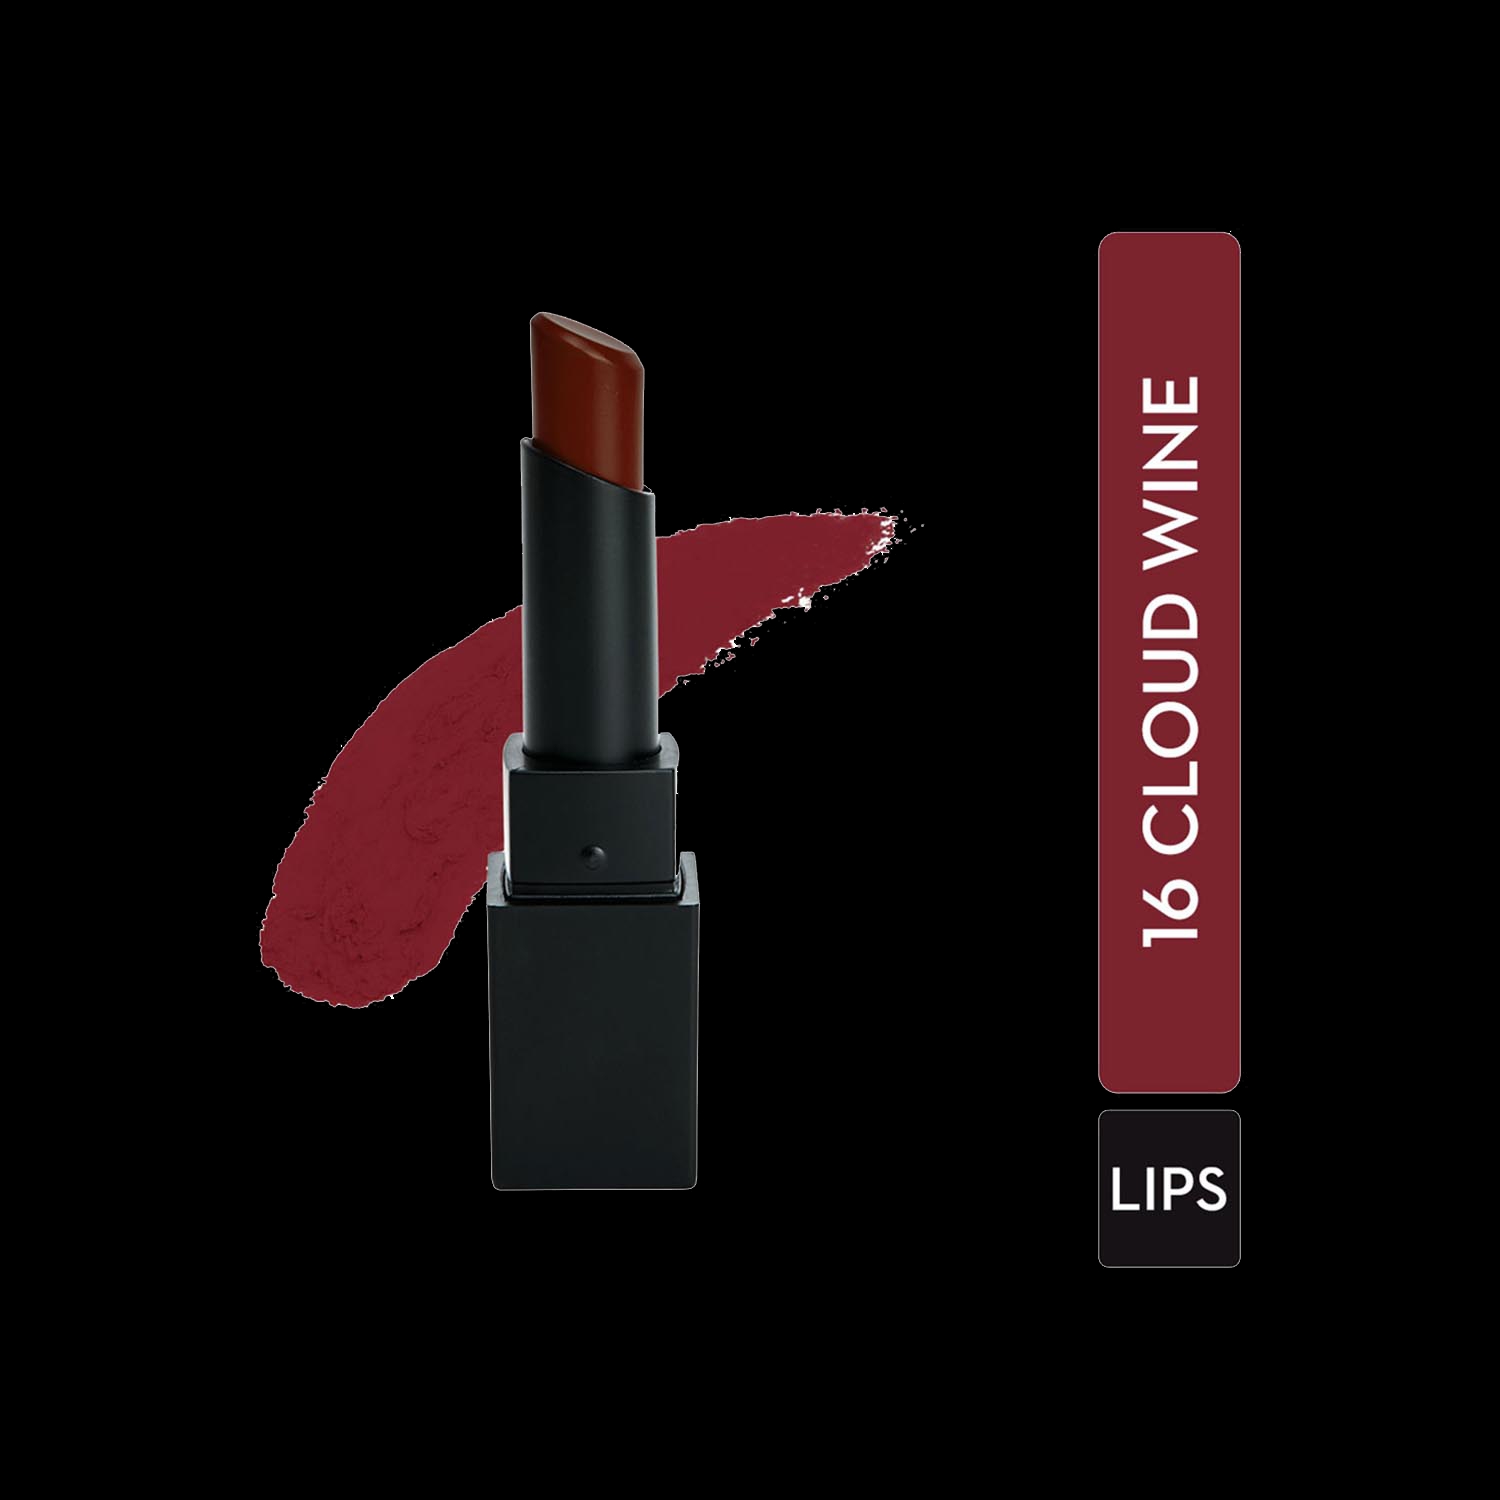 SUGAR Cosmetics | SUGAR Cosmetics Nothing Else Matter Longwear Lipstick - 16 Cloud Wine (Burgundy, Red Berry) (3.5g)